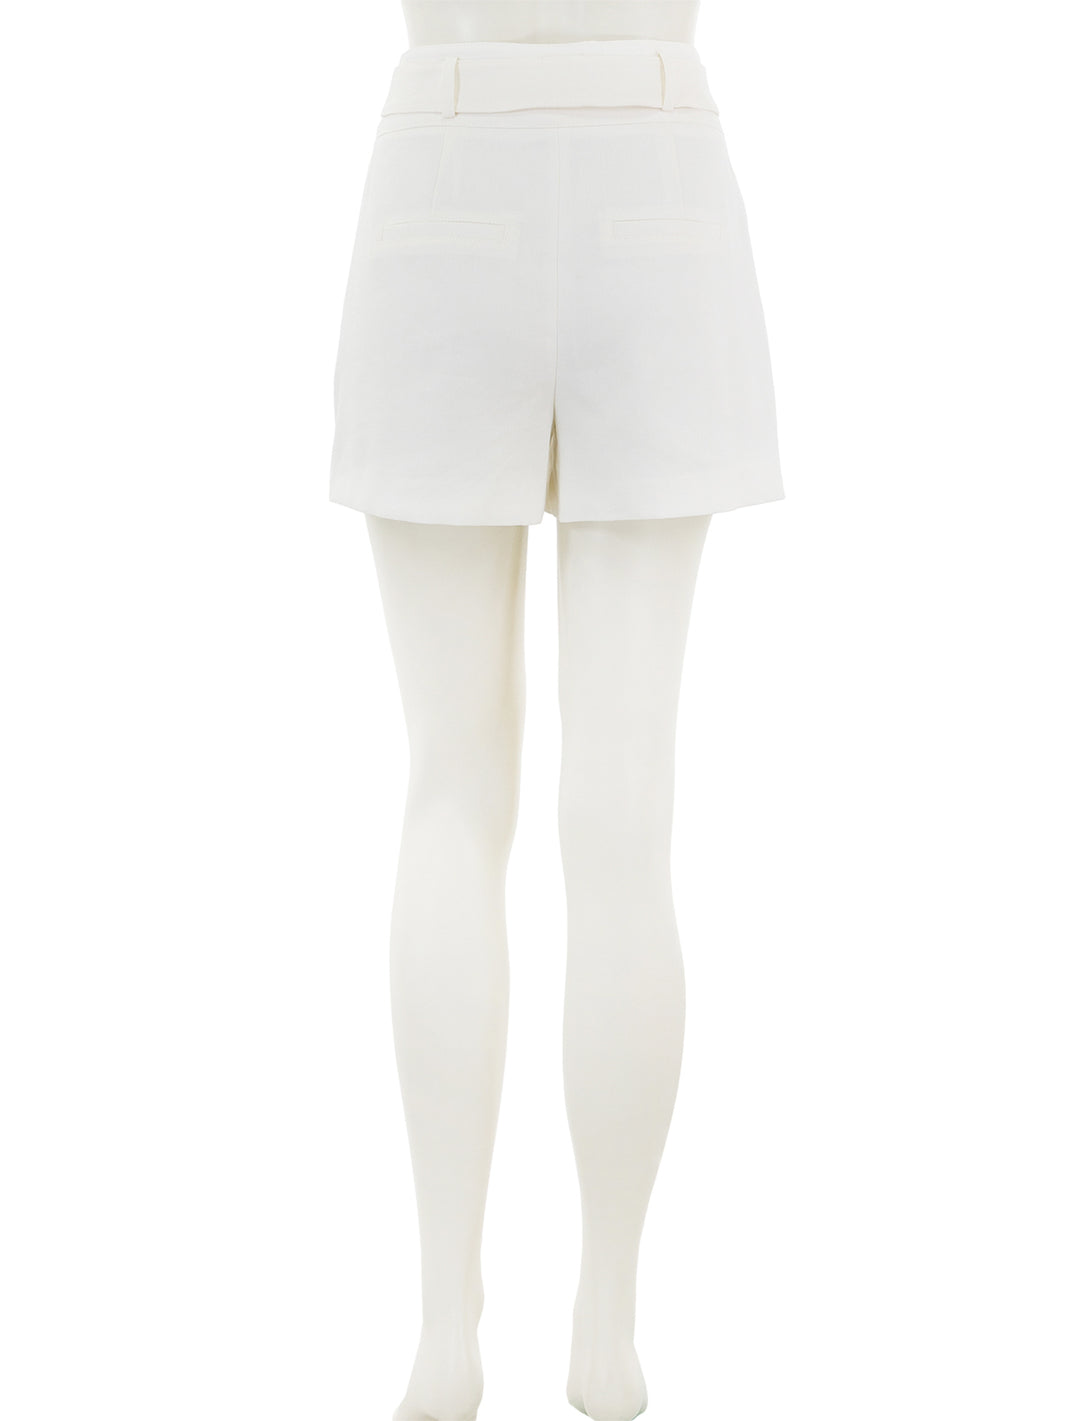 Back view of Veronica Beard's runo shorts in white.